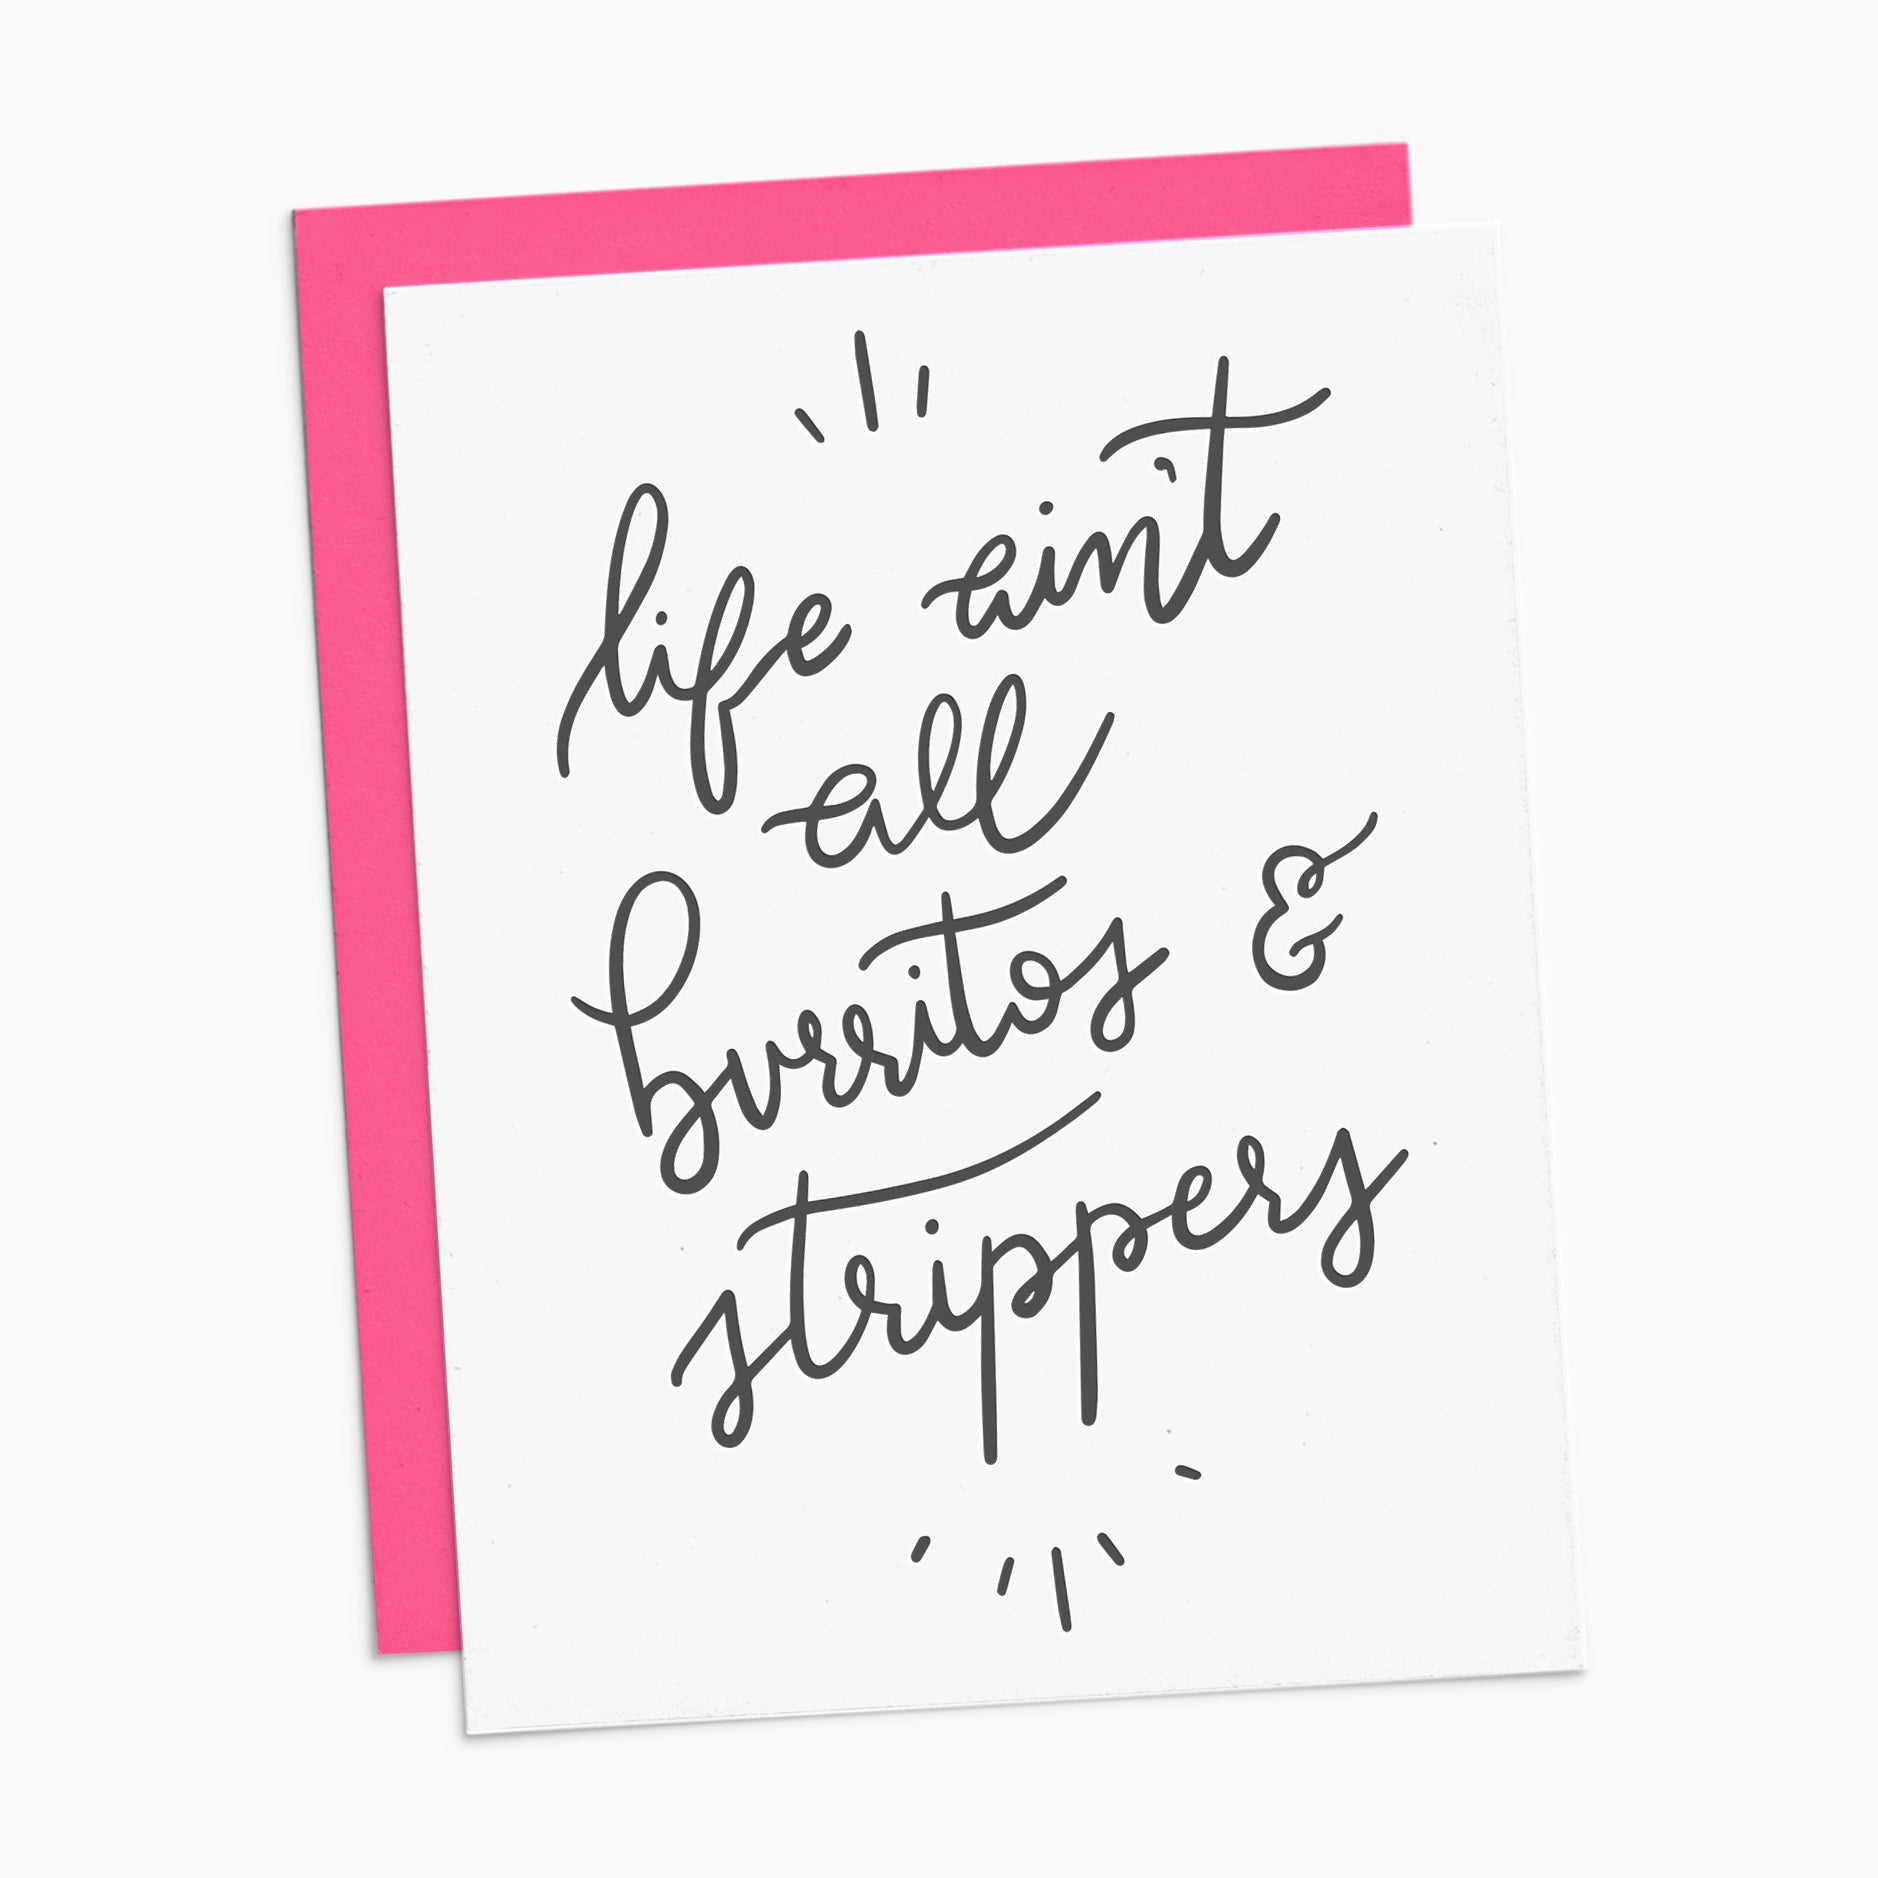 Burritos + Strippers Card